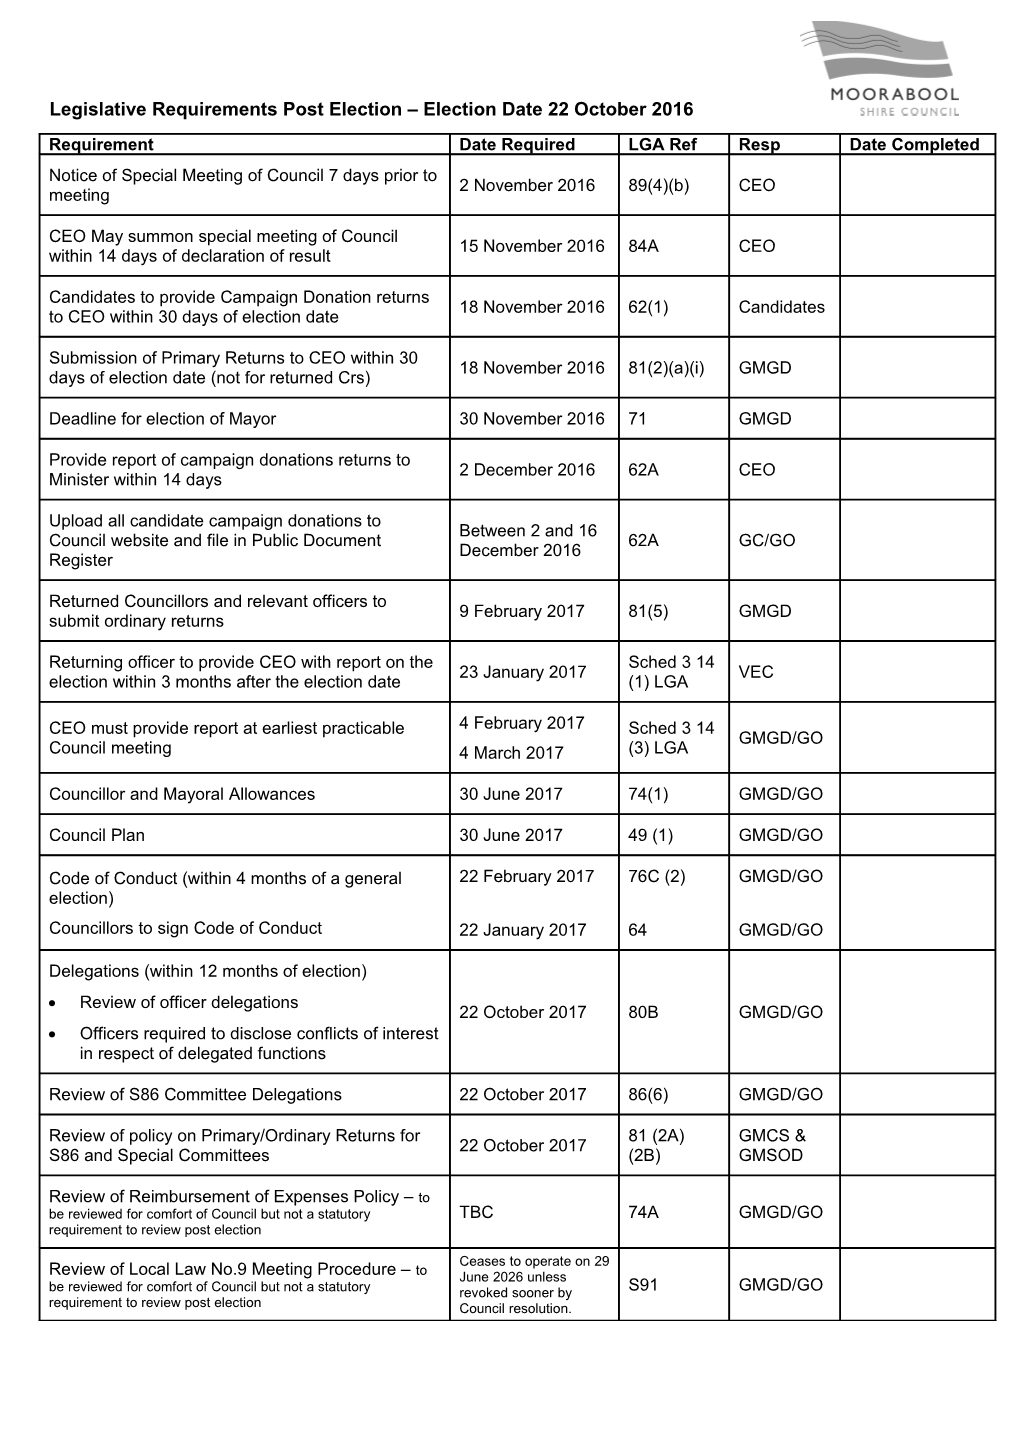 Legislative Requirements Post Election Election Date 27 October 2012